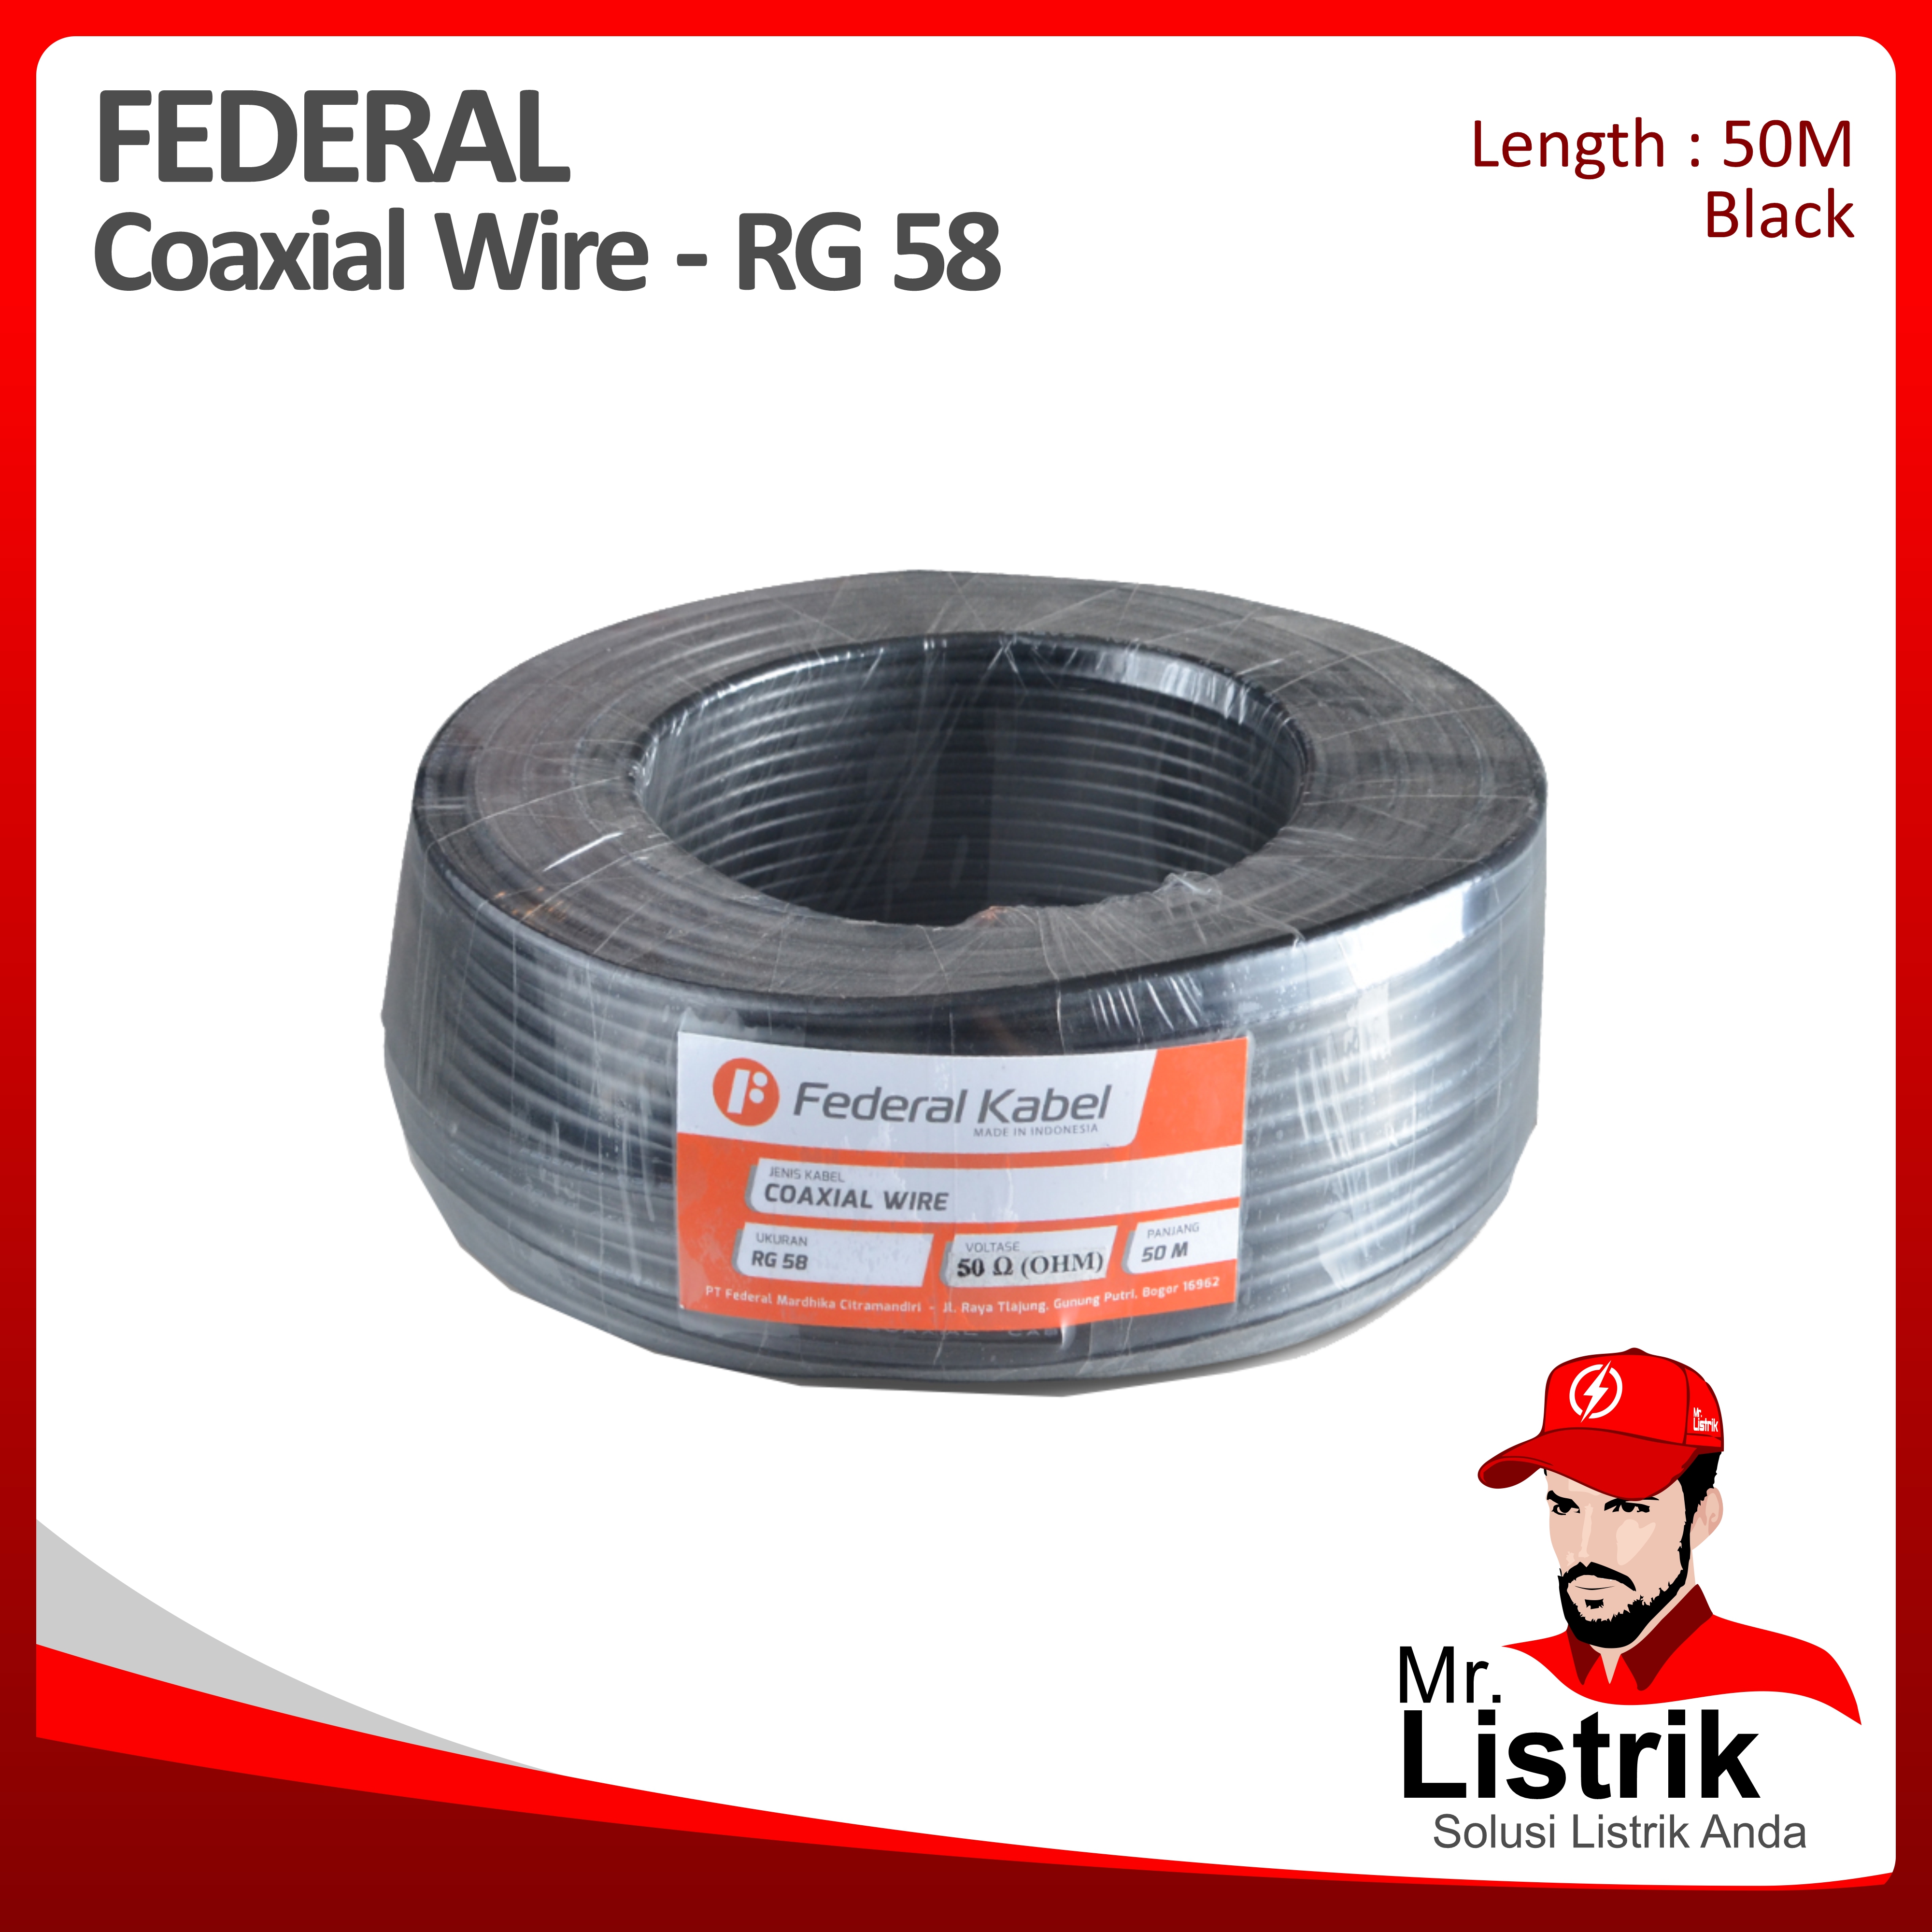 Kabel Coaxial Federal RG-58  50 Ohm @50 Mtr